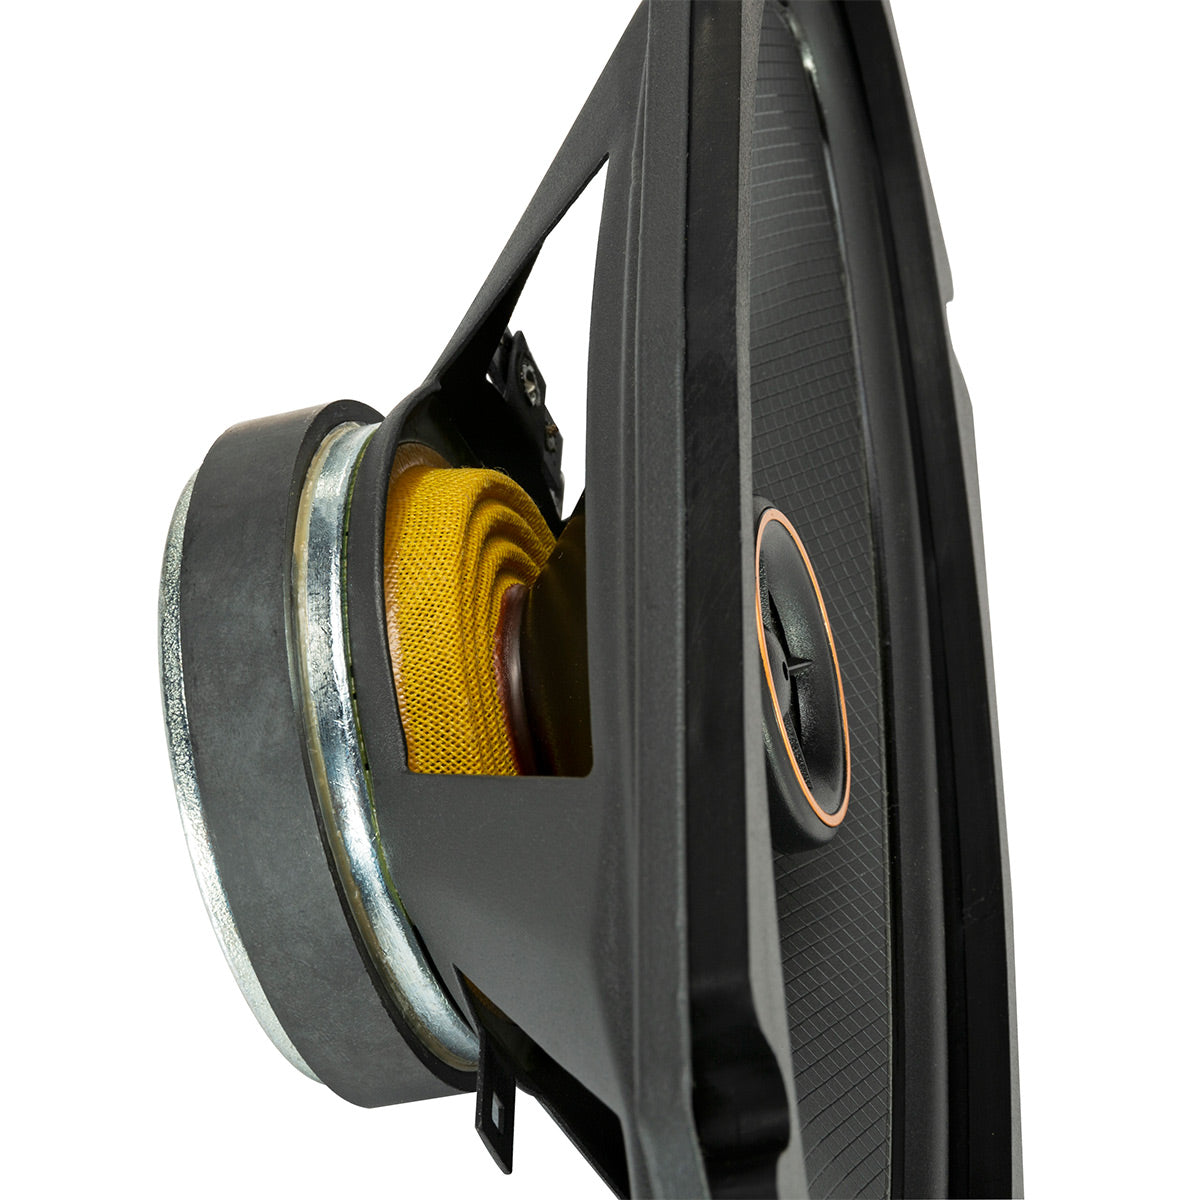 Kicker 51KSC41004 4x10" KS Series Coaxial Speakers - Pair